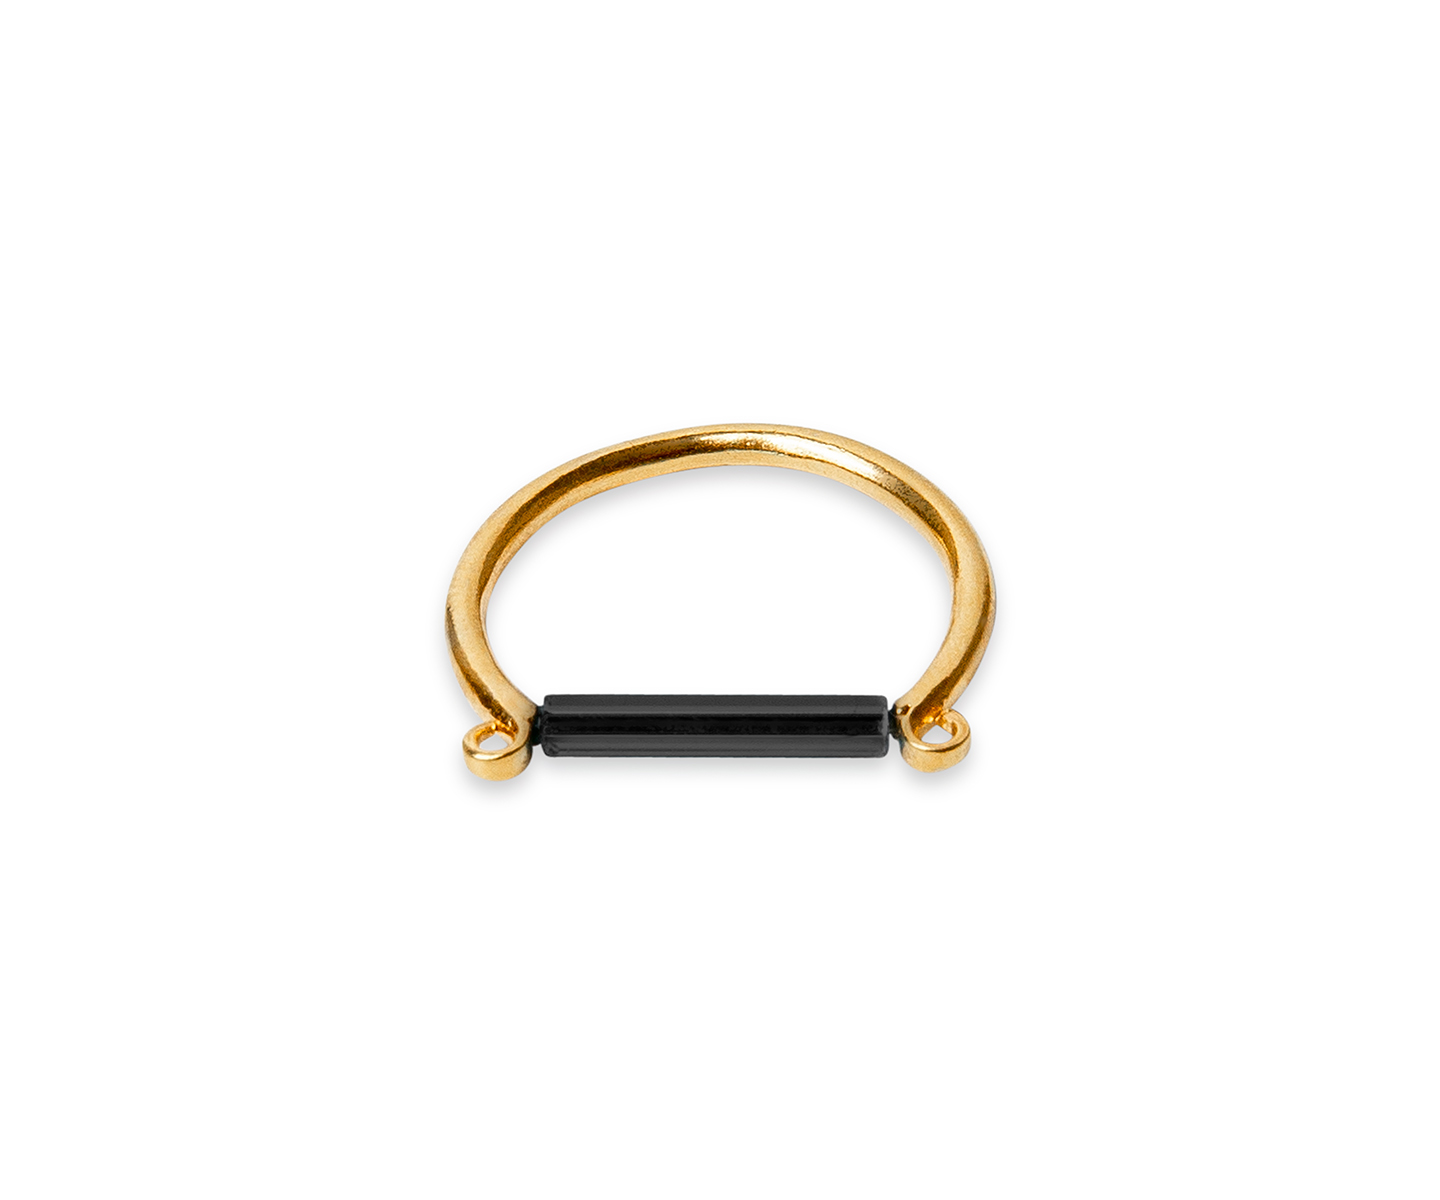 Gold ring with minimalist black bar